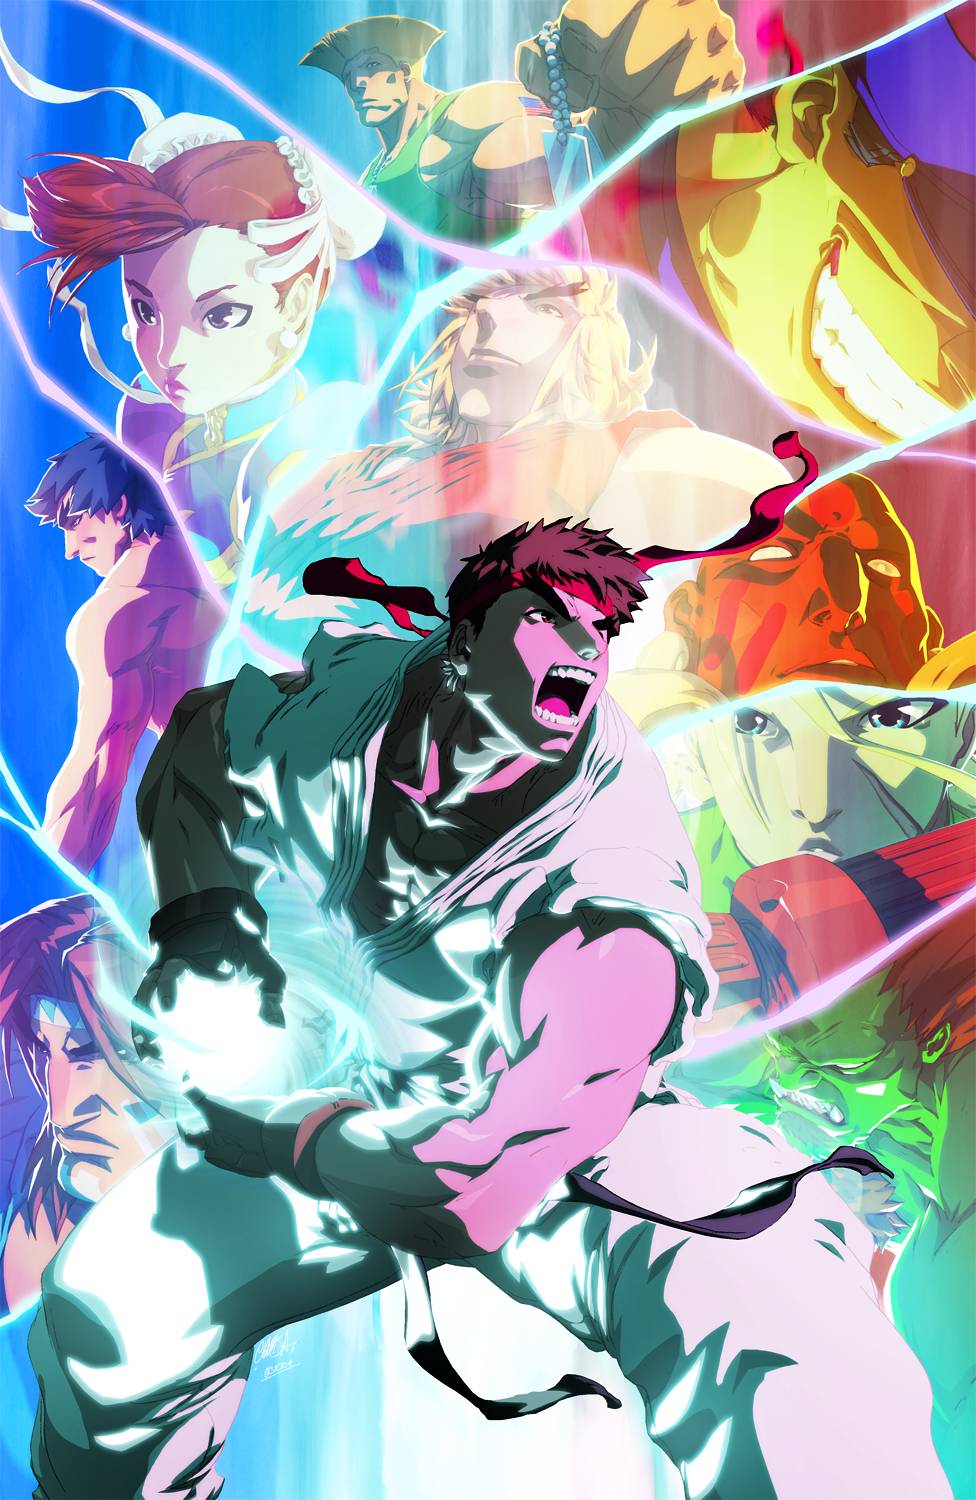 Anime Gallery - Street Fighter II V